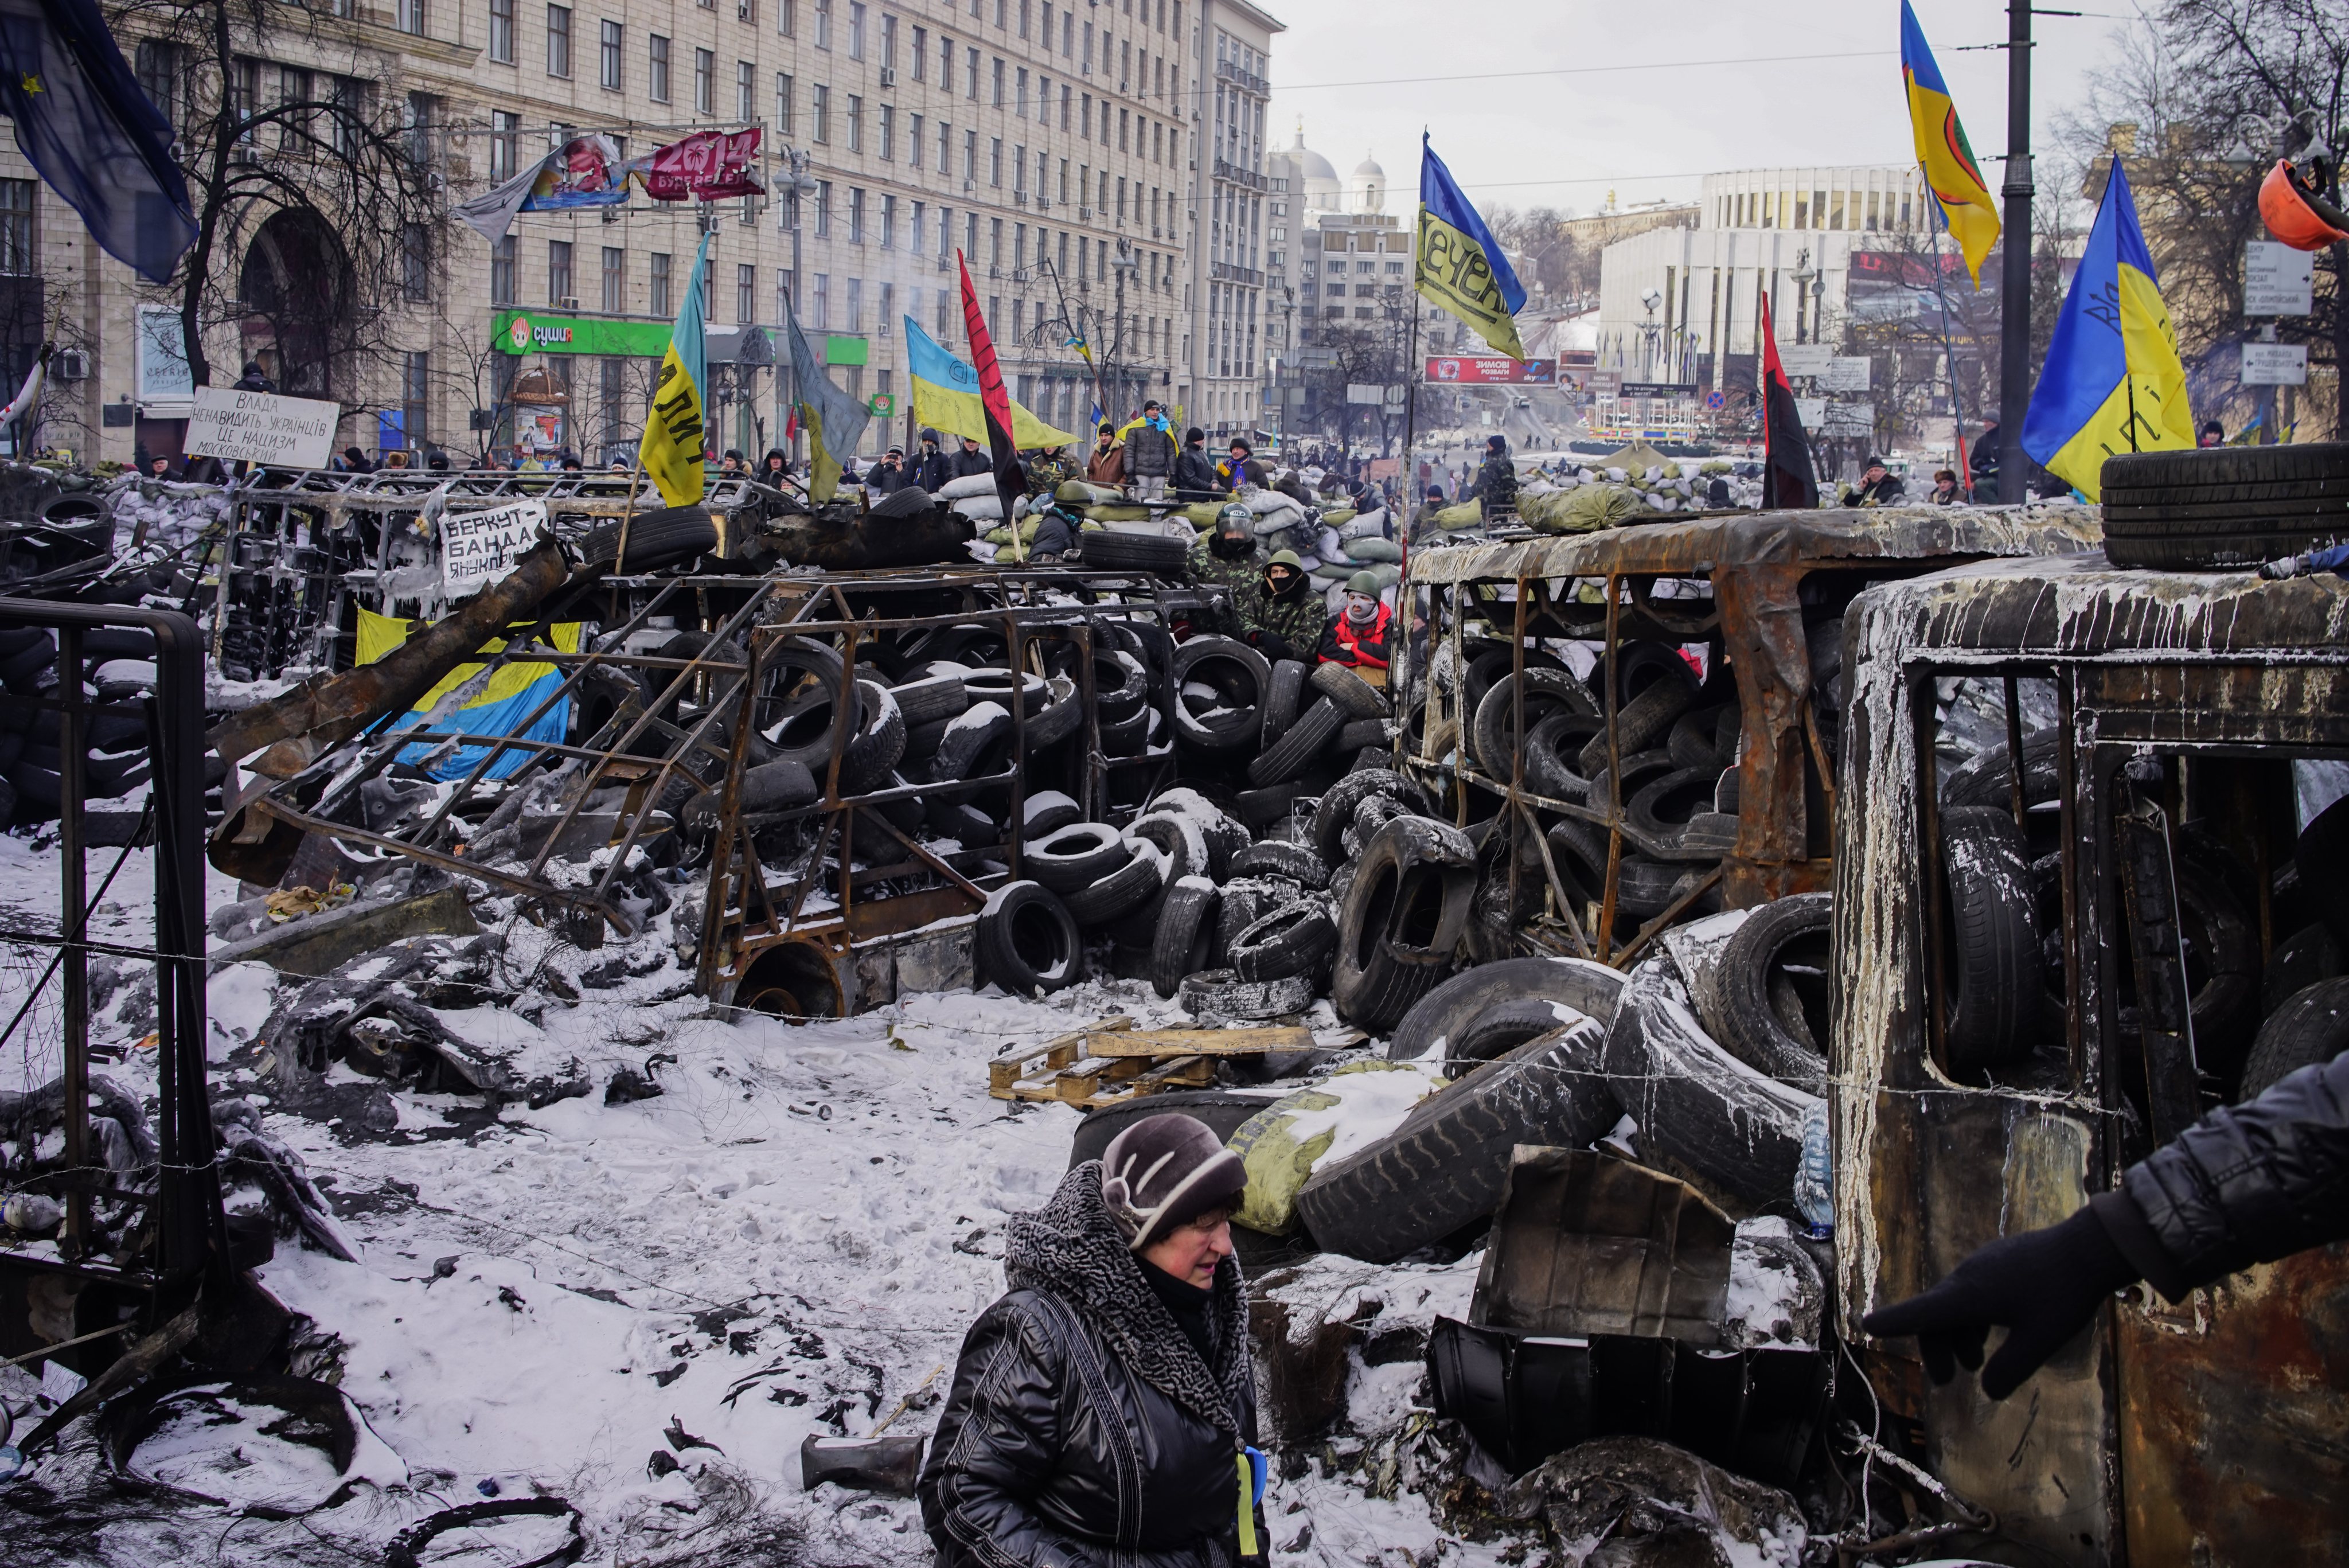 At the Euromaidan Barricades in Kiev, Feb 2014